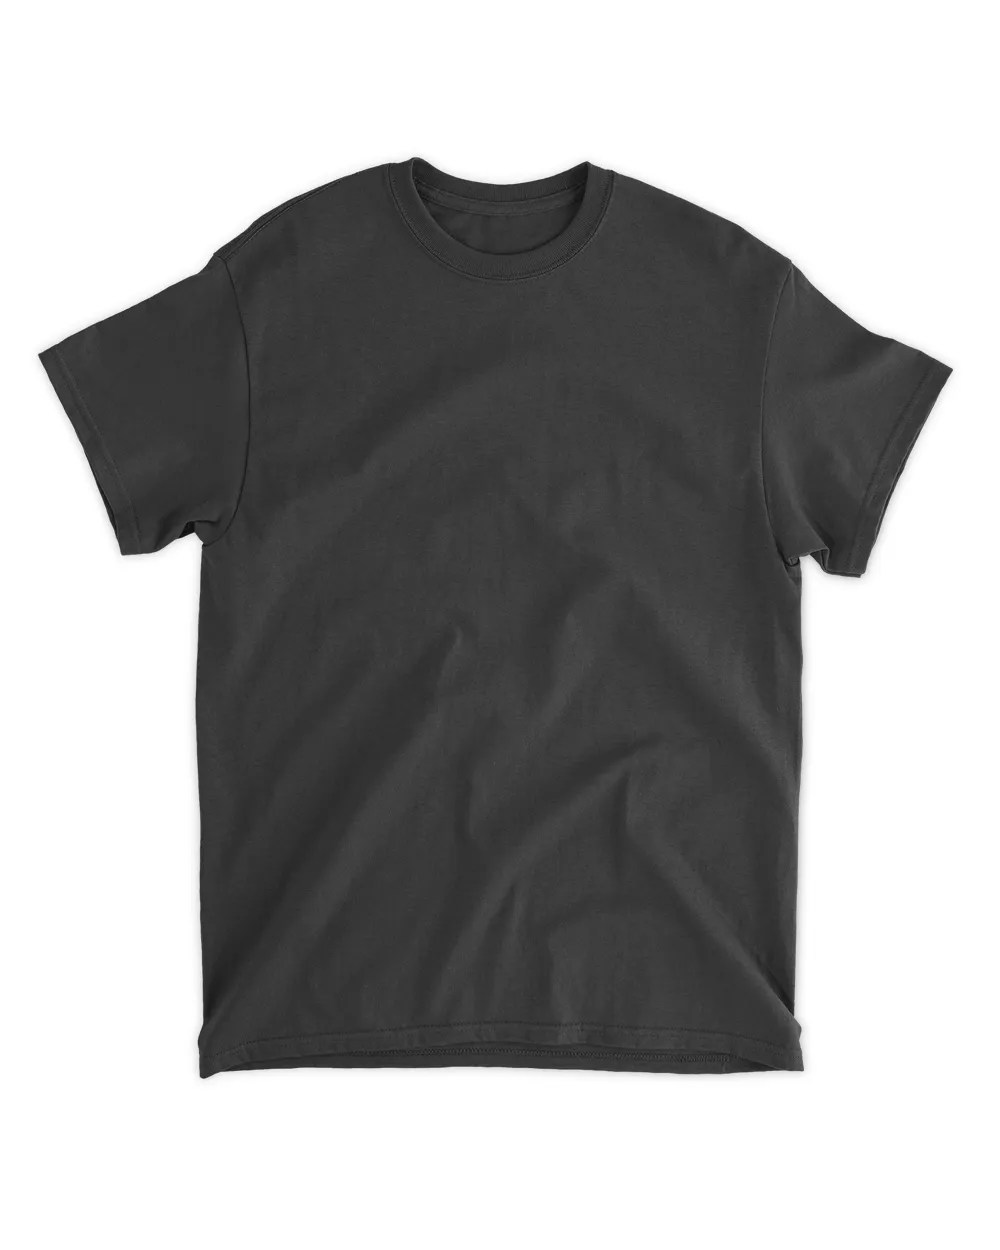 https://toucanstyle.com/year-of-renaissance-shirt